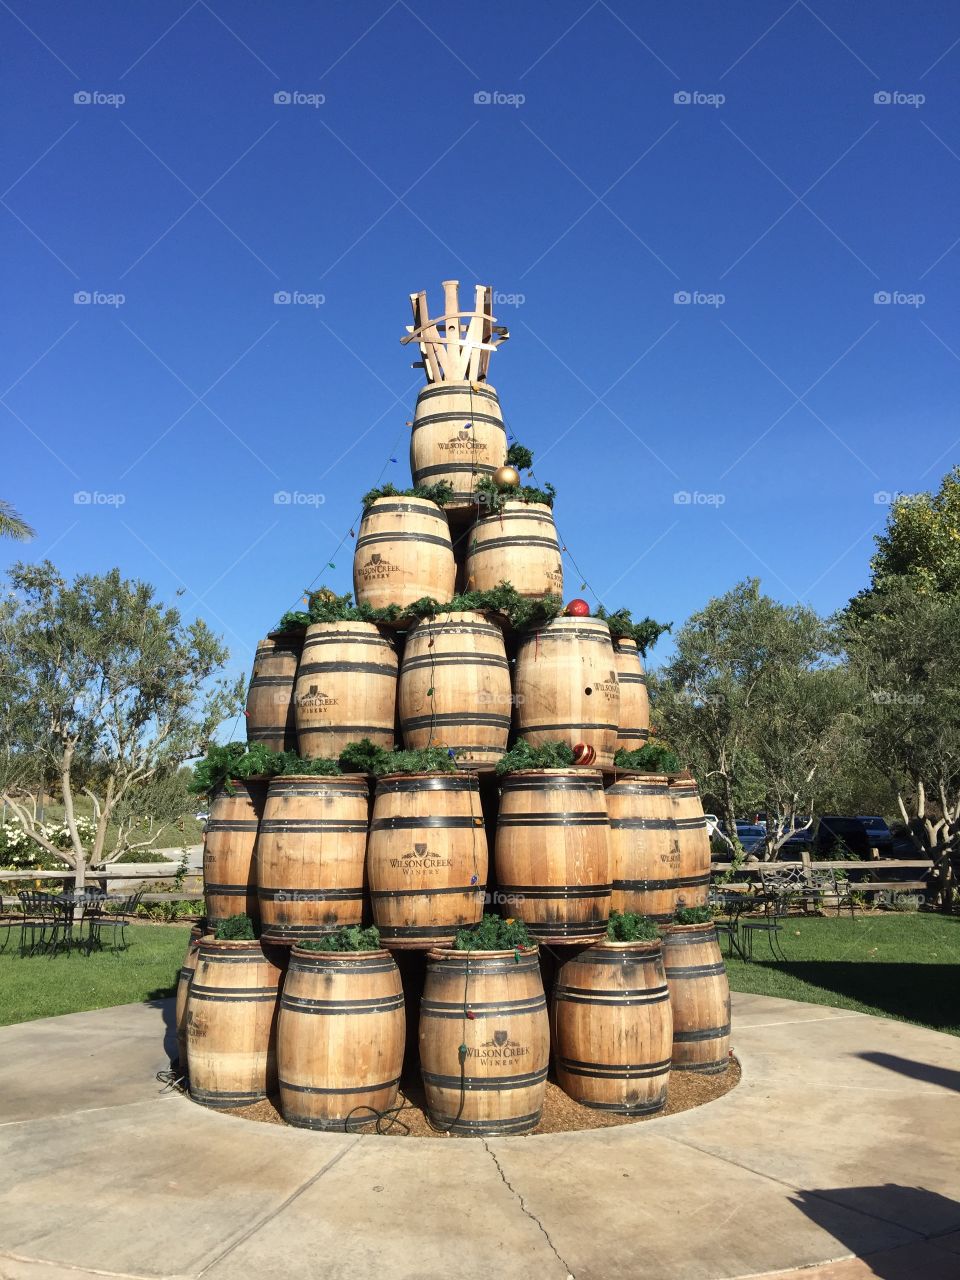 Barrel
Decoration
Winery 